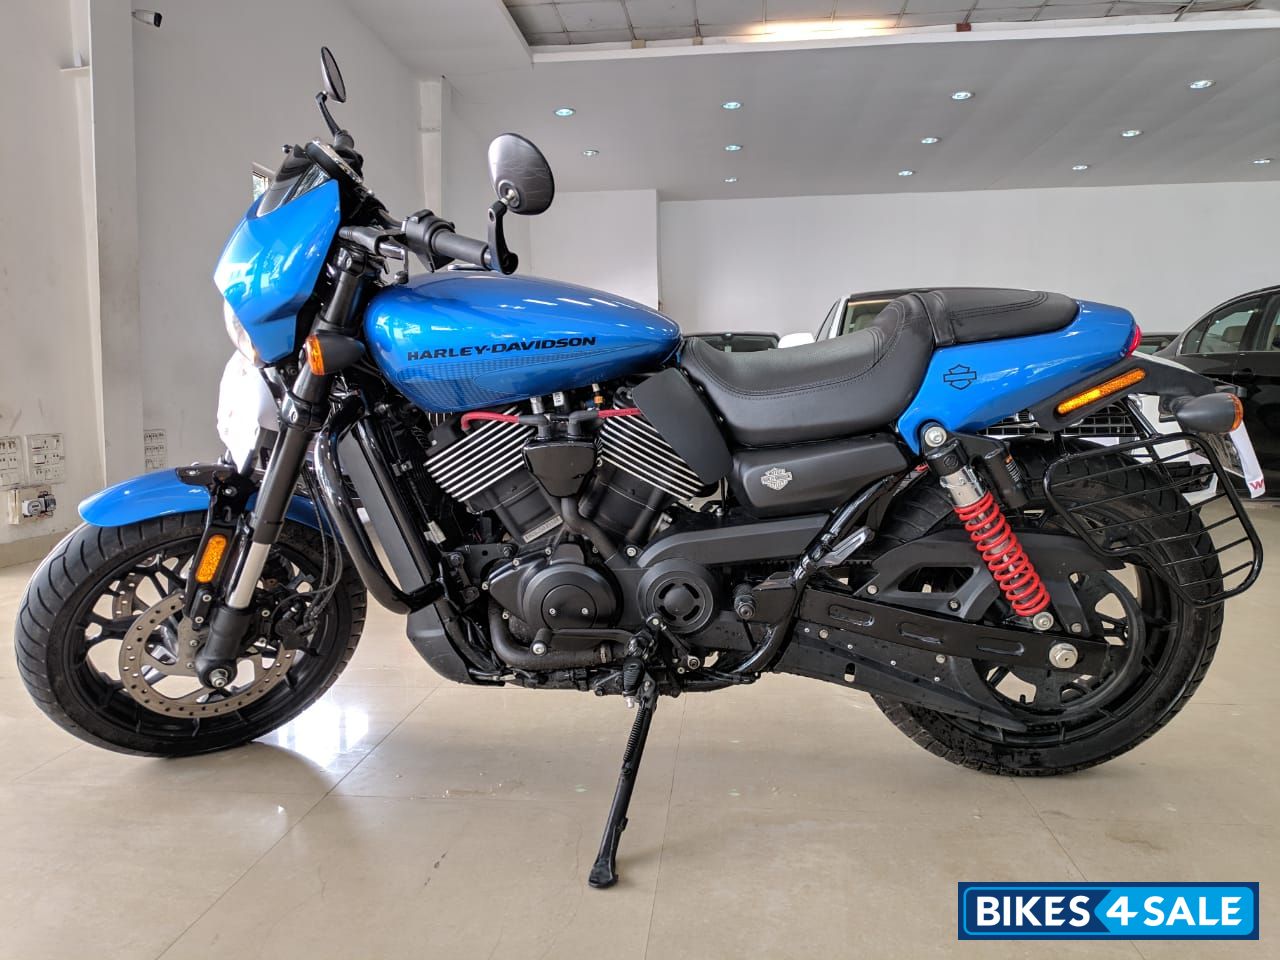 Used 2018 Model Harley Davidson Street Rod For Sale In Bangalore Id 245553 Bikes4sale